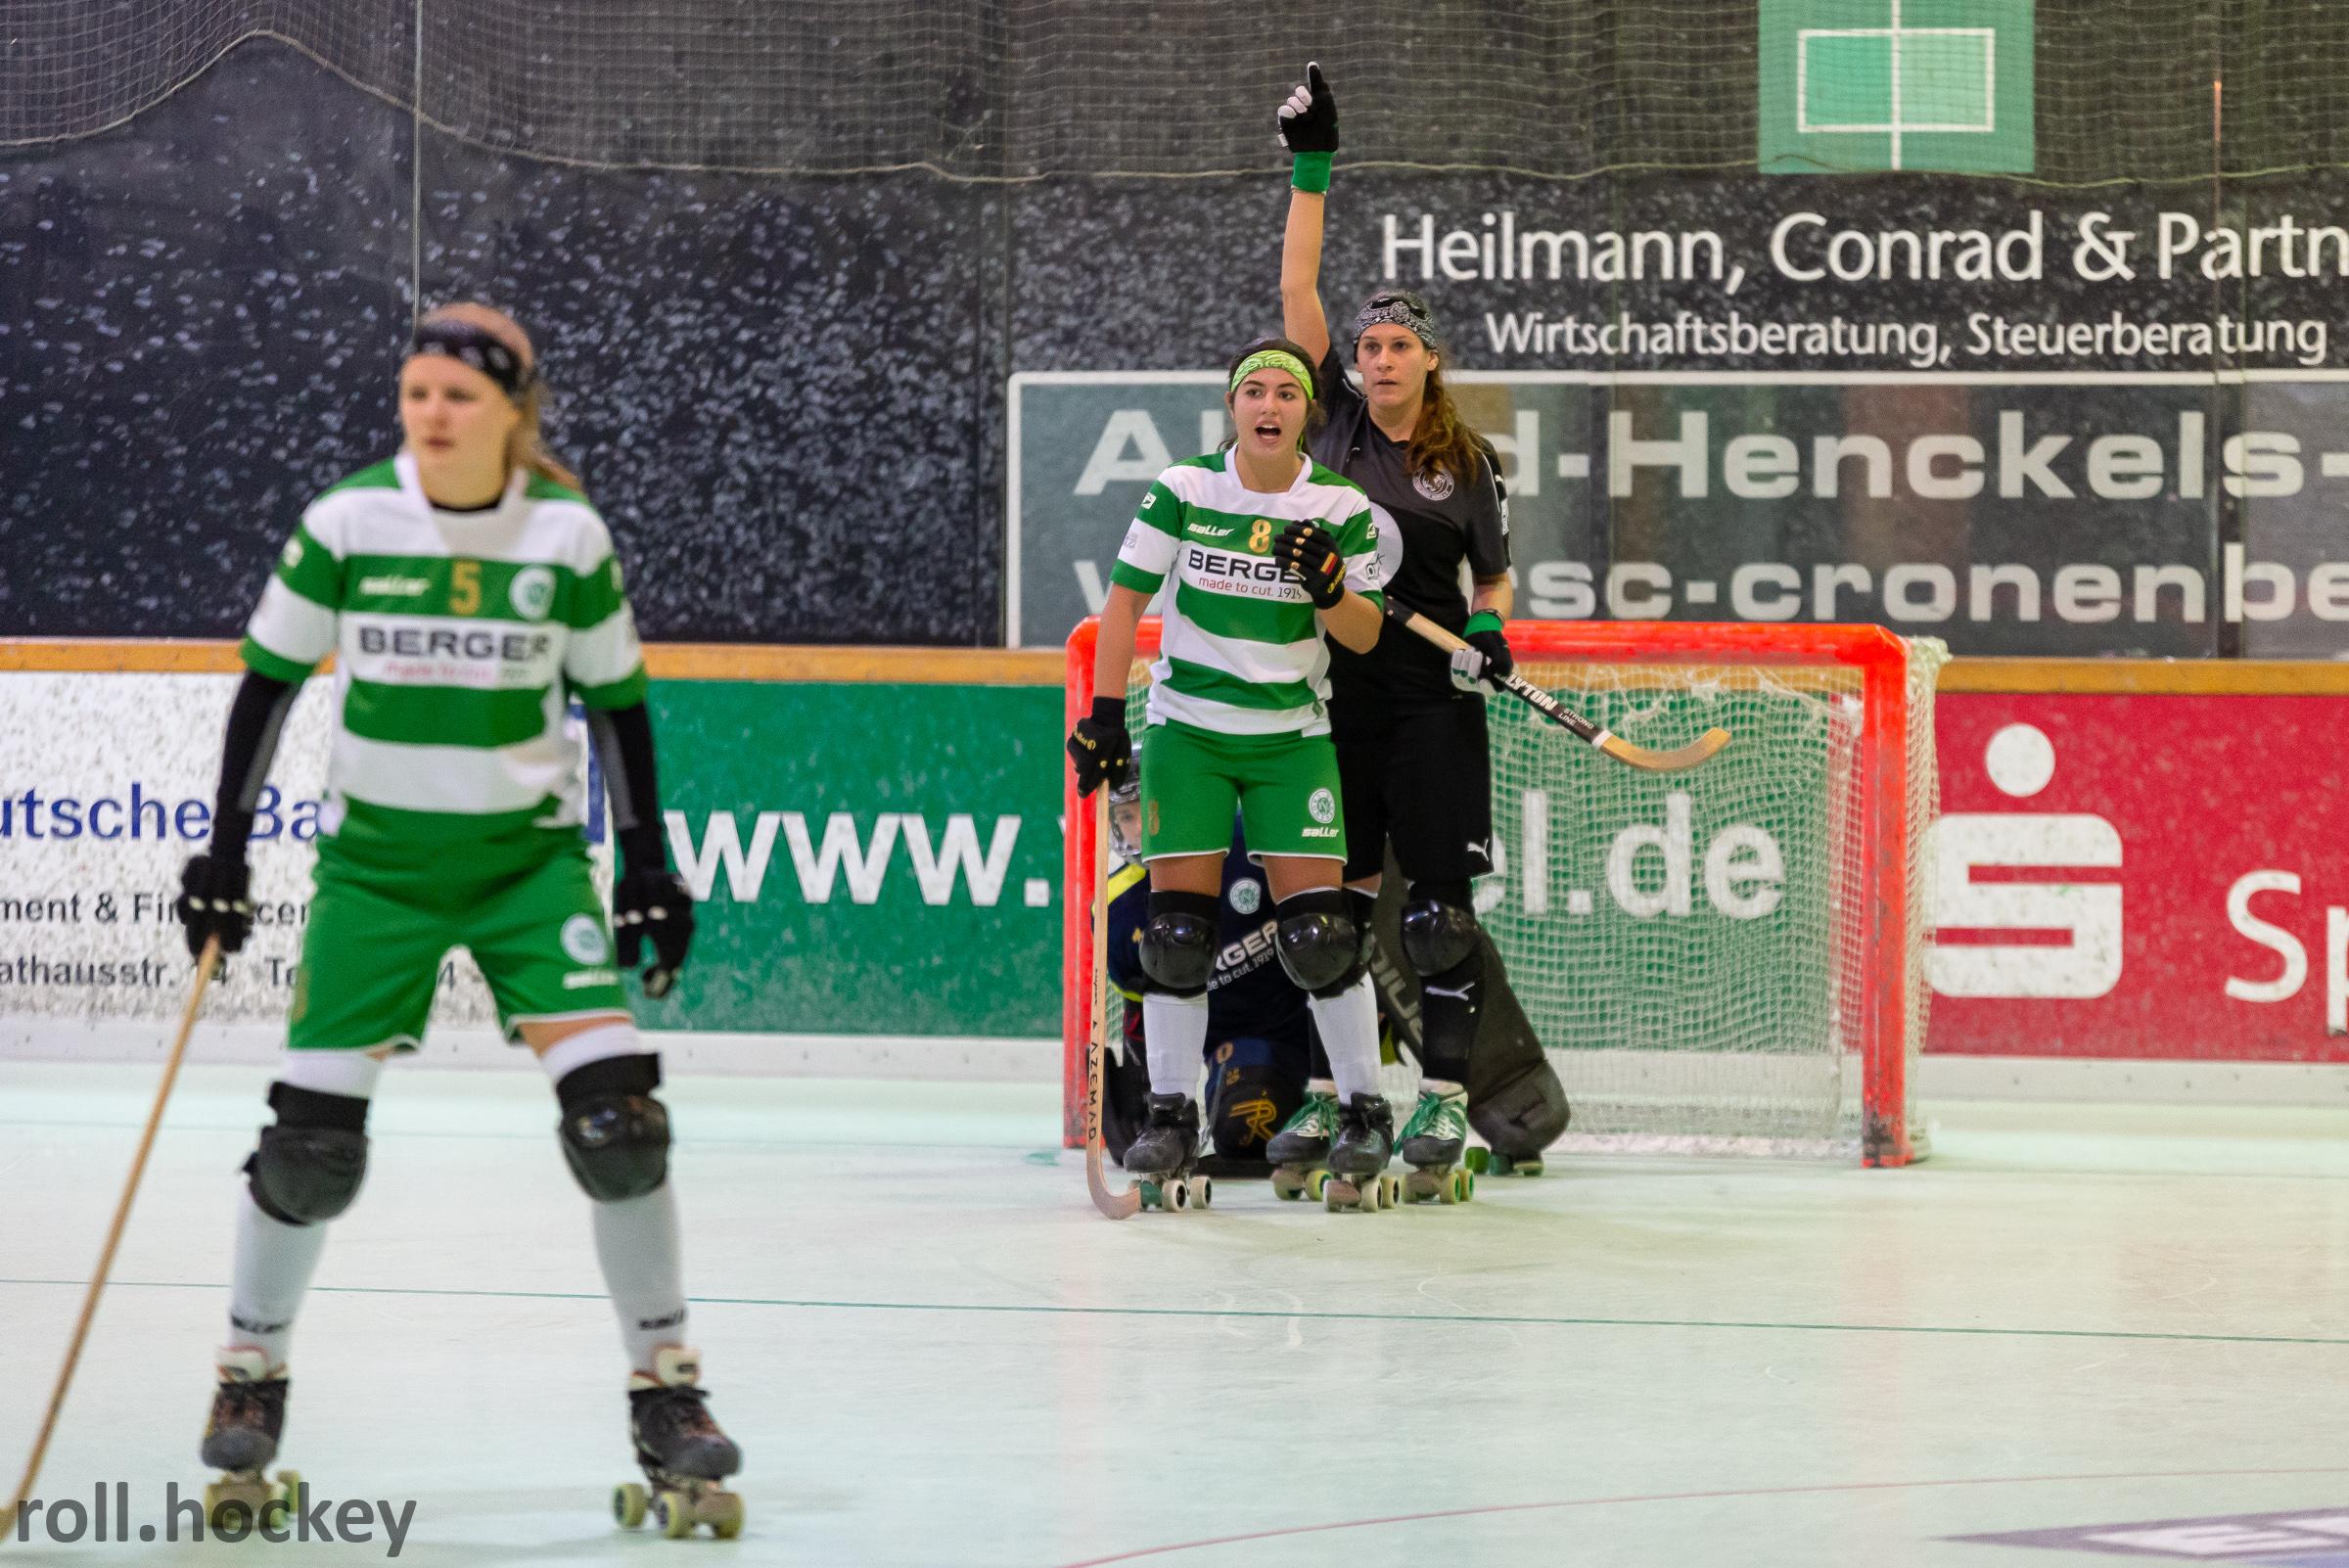 RSC Cronenberg Rollhockey Bundesliga Damen Spieltag 01.12.2018